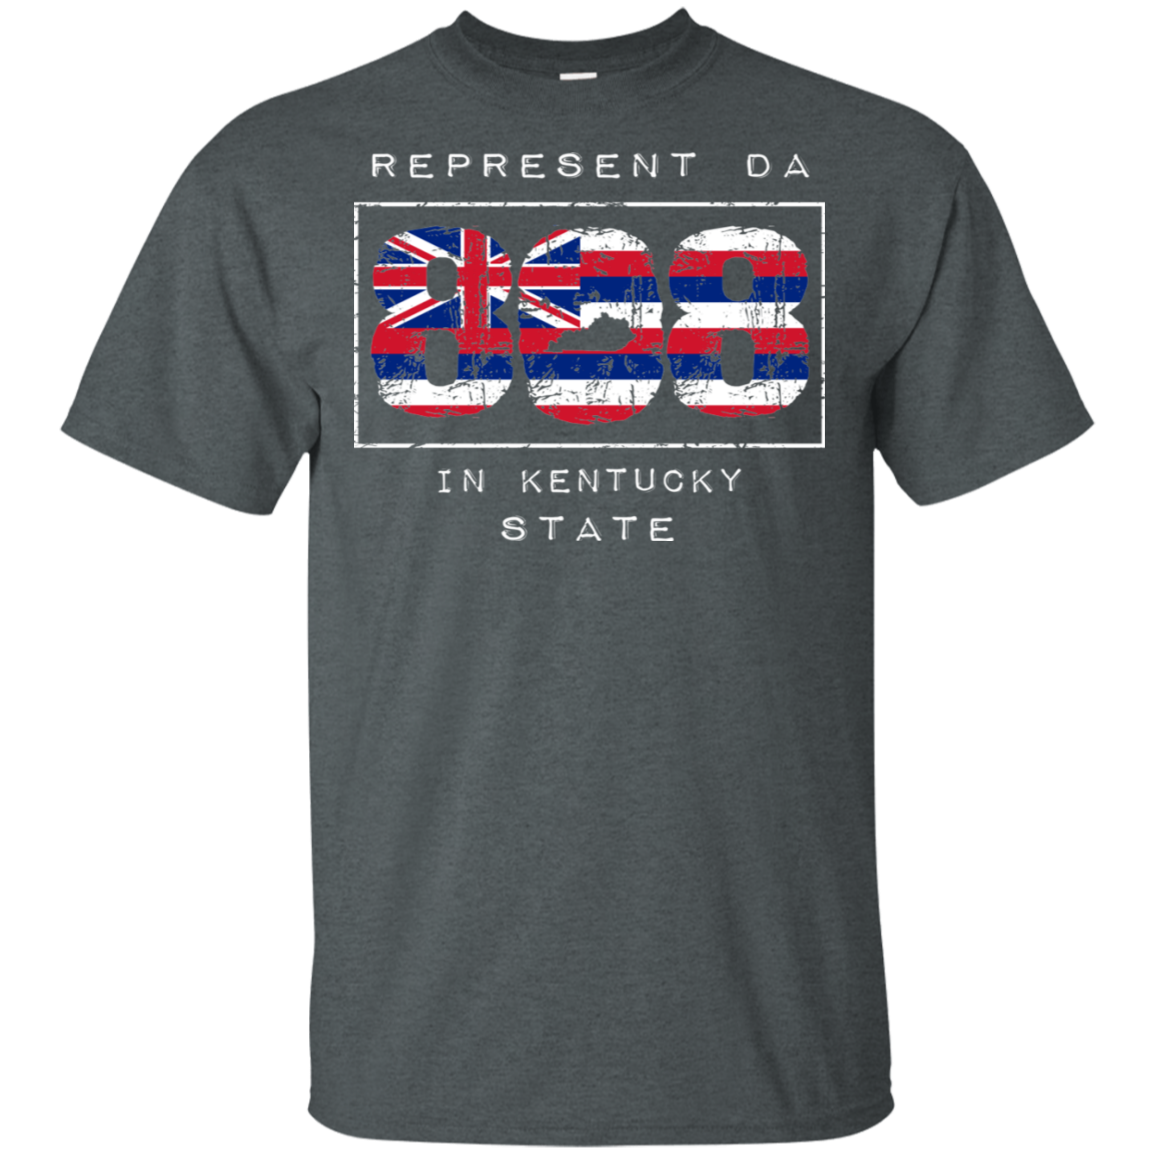 Rep Da 808 In Kentucky State Ultra Cotton T-Shirt, T-Shirts, Hawaii Nei All Day